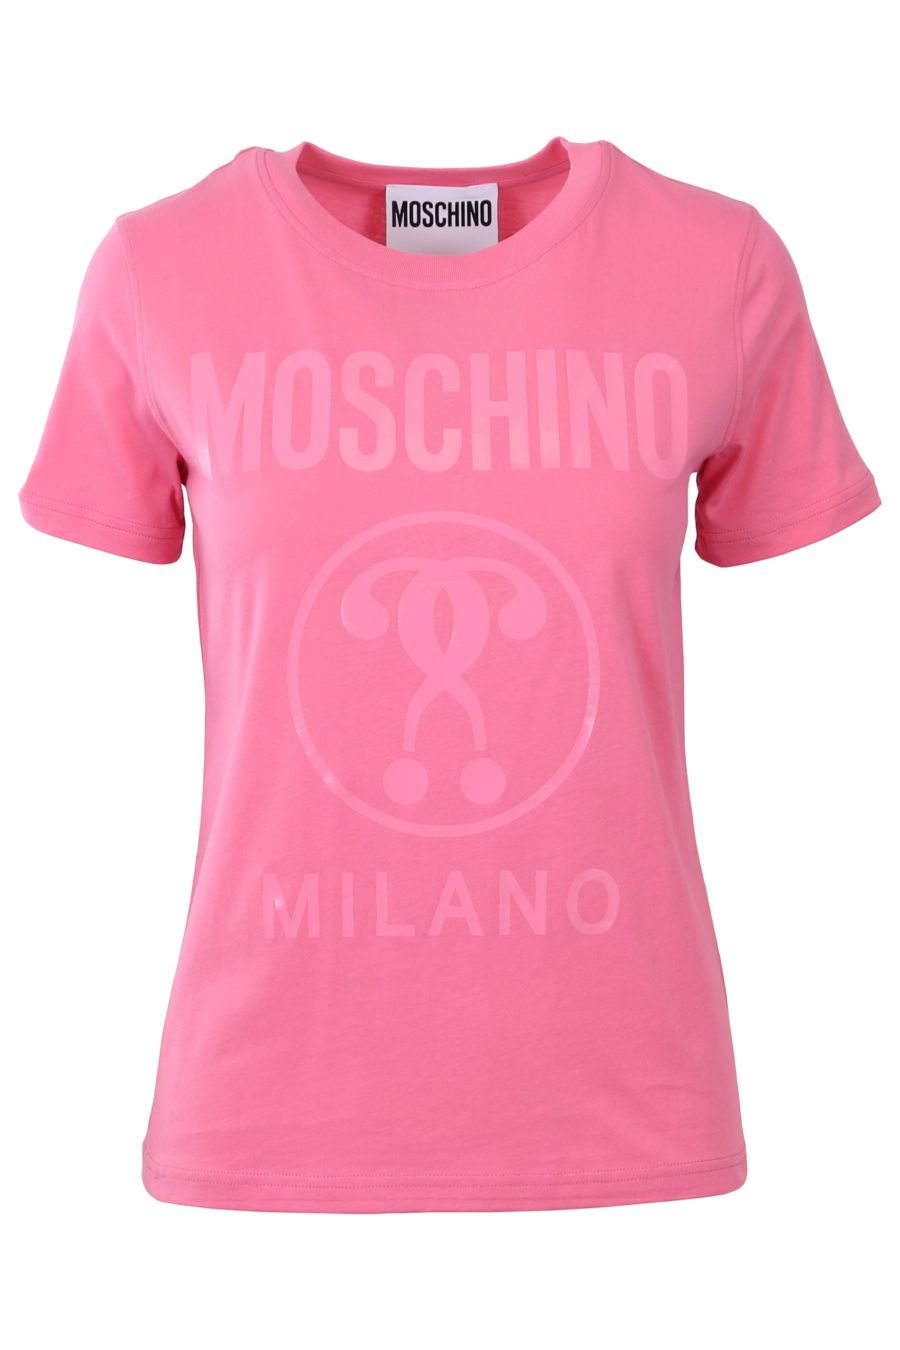 Camiseta Moschino Couture rosa con logo grande milano - e1f8e052928ebe84671a4da4ec100db4fba92882